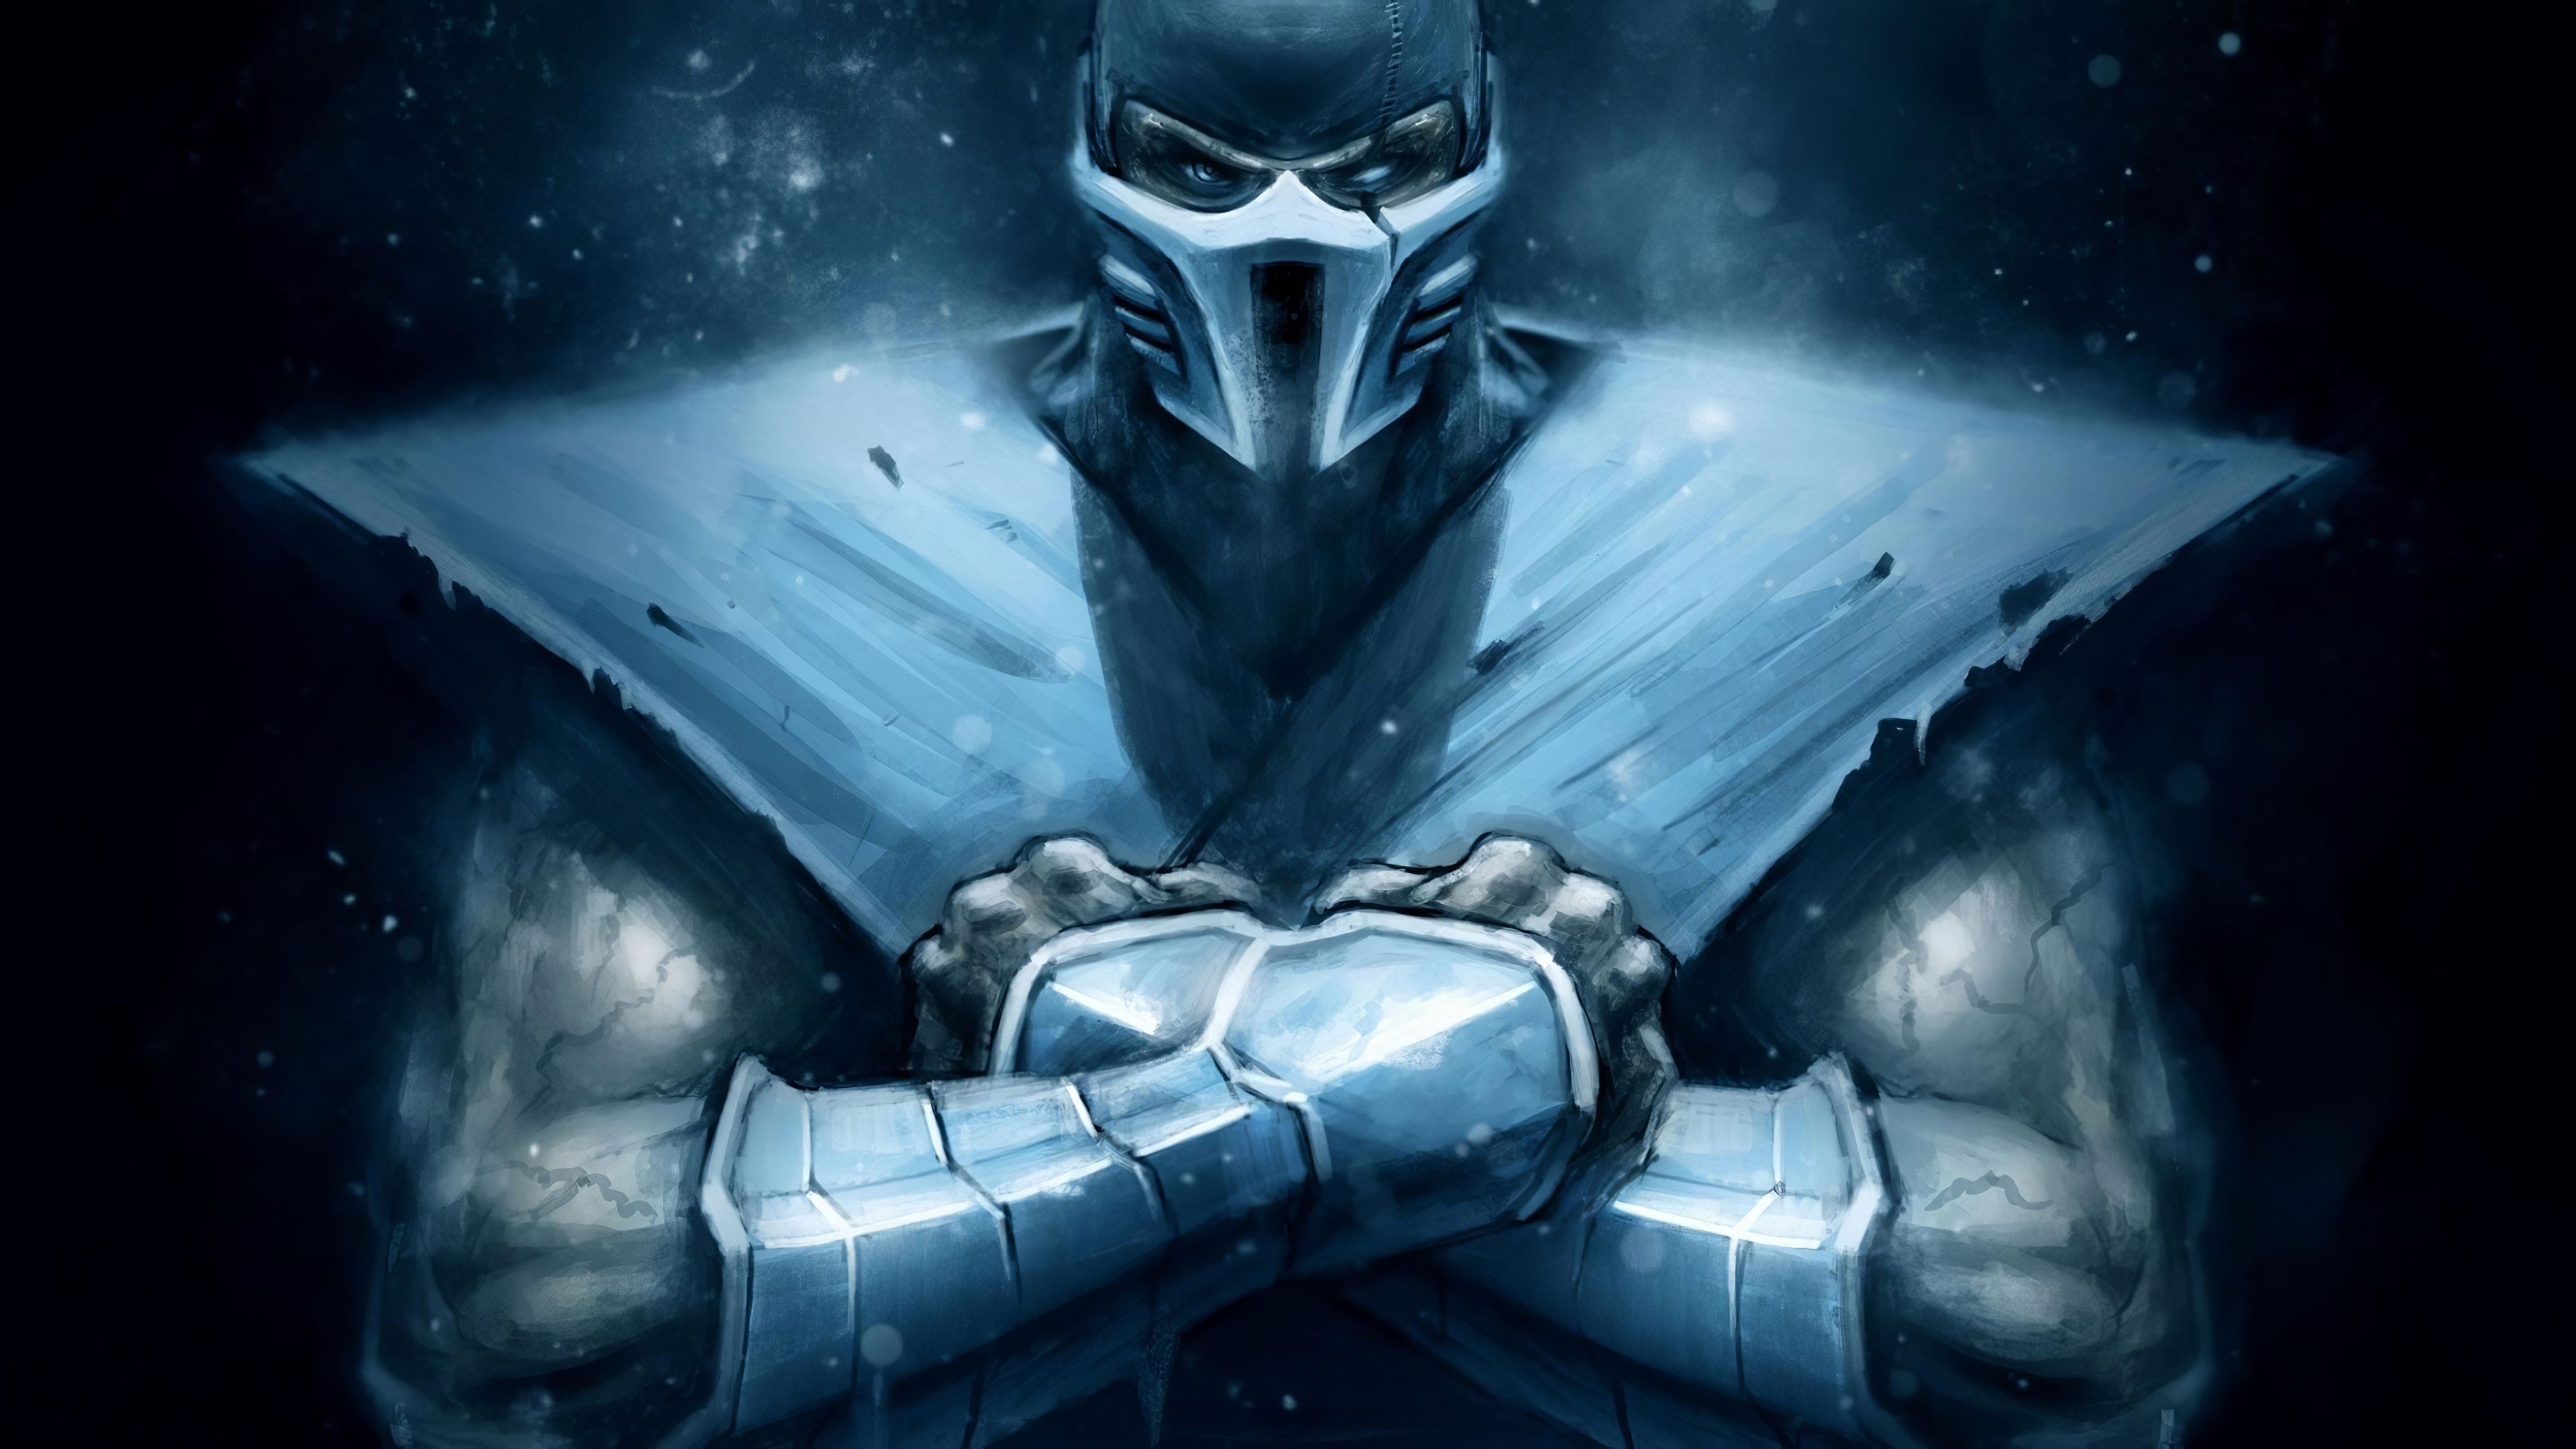 Sub Zero Mortal Kombat 4k, HD Games, 4k Wallpaper, Image, Background, Photo and Picture